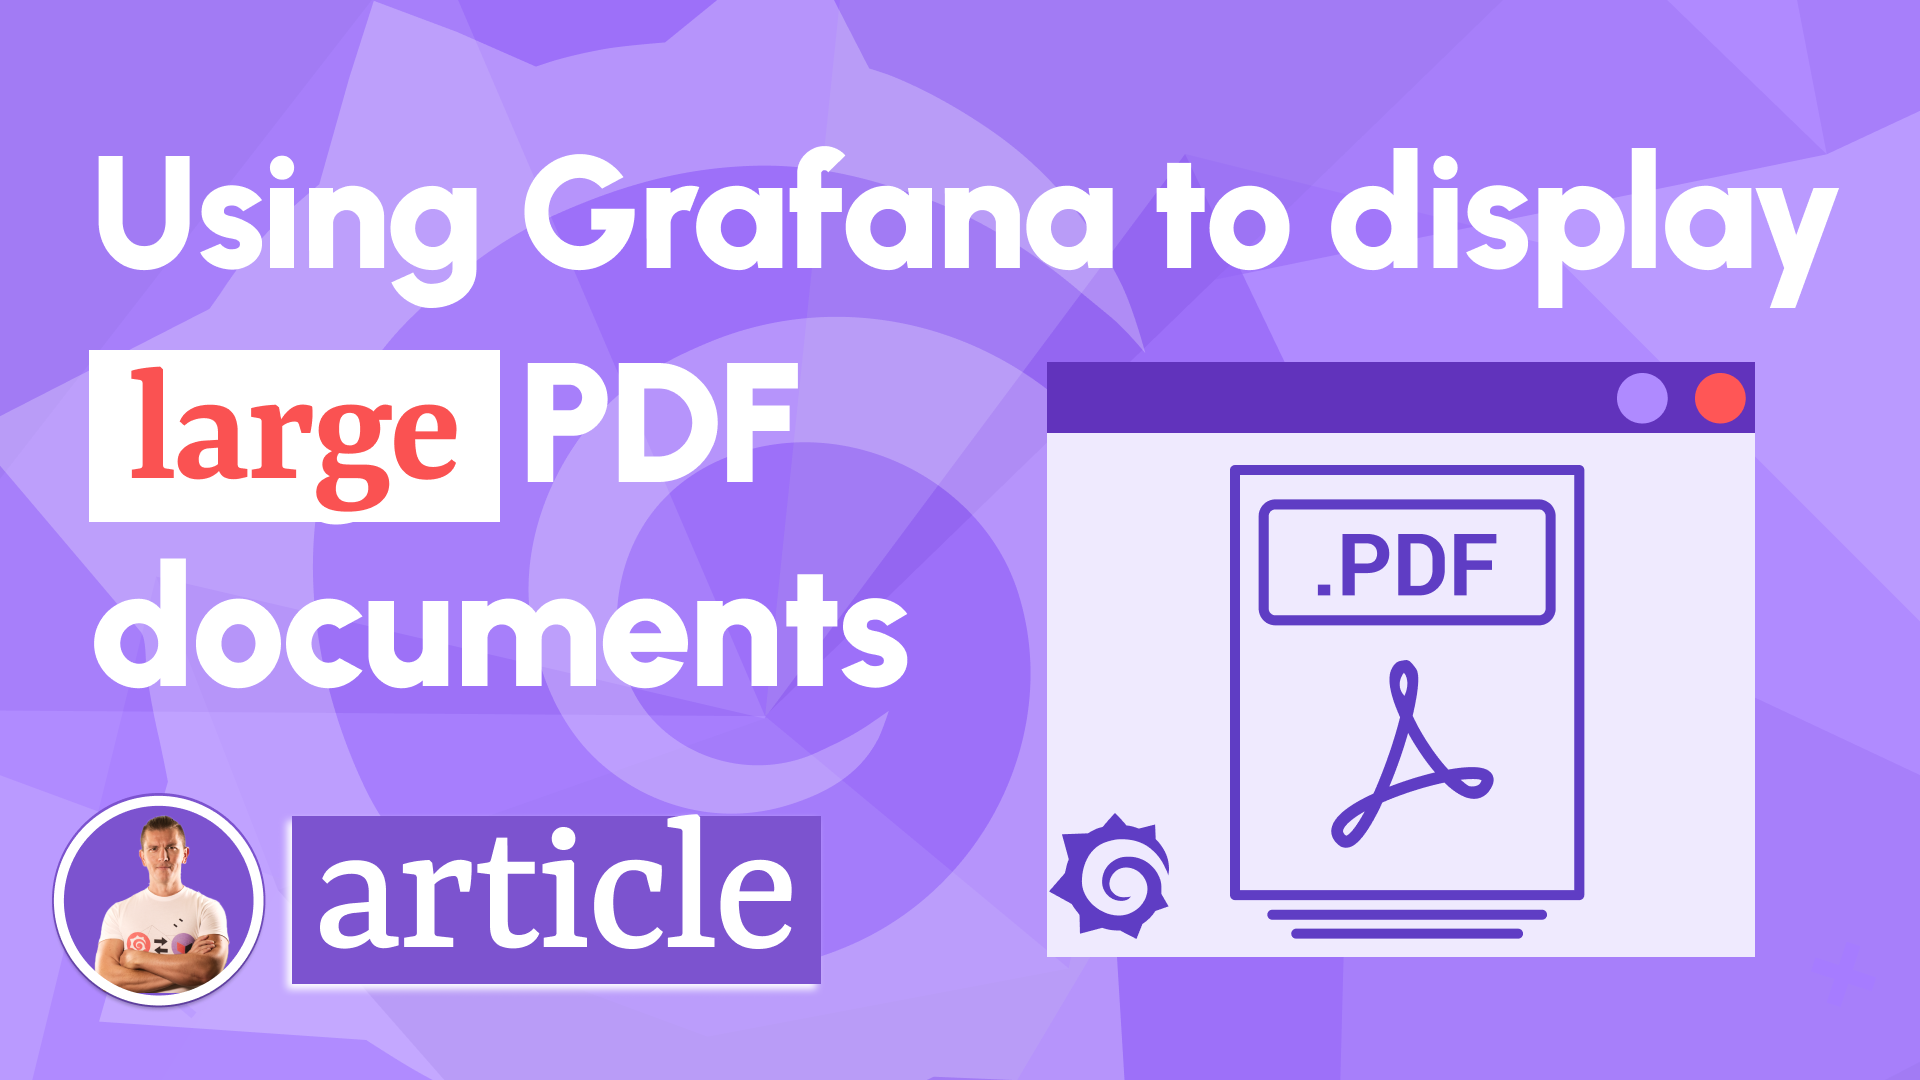 Display Large PDF documents in Grafana